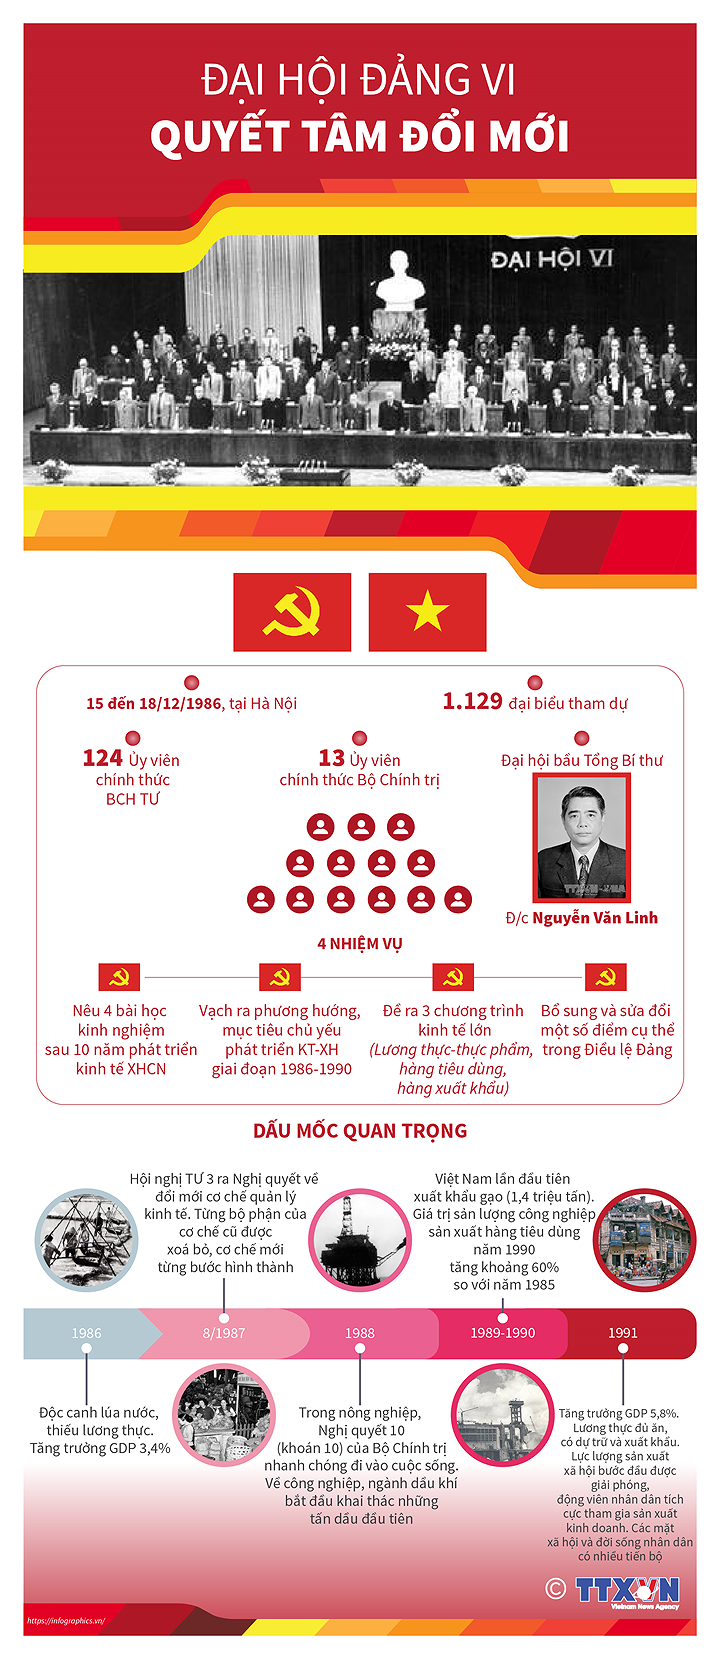 [Infographics] Dai hoi Dang VI: Quyet tam doi moi hinh anh 1